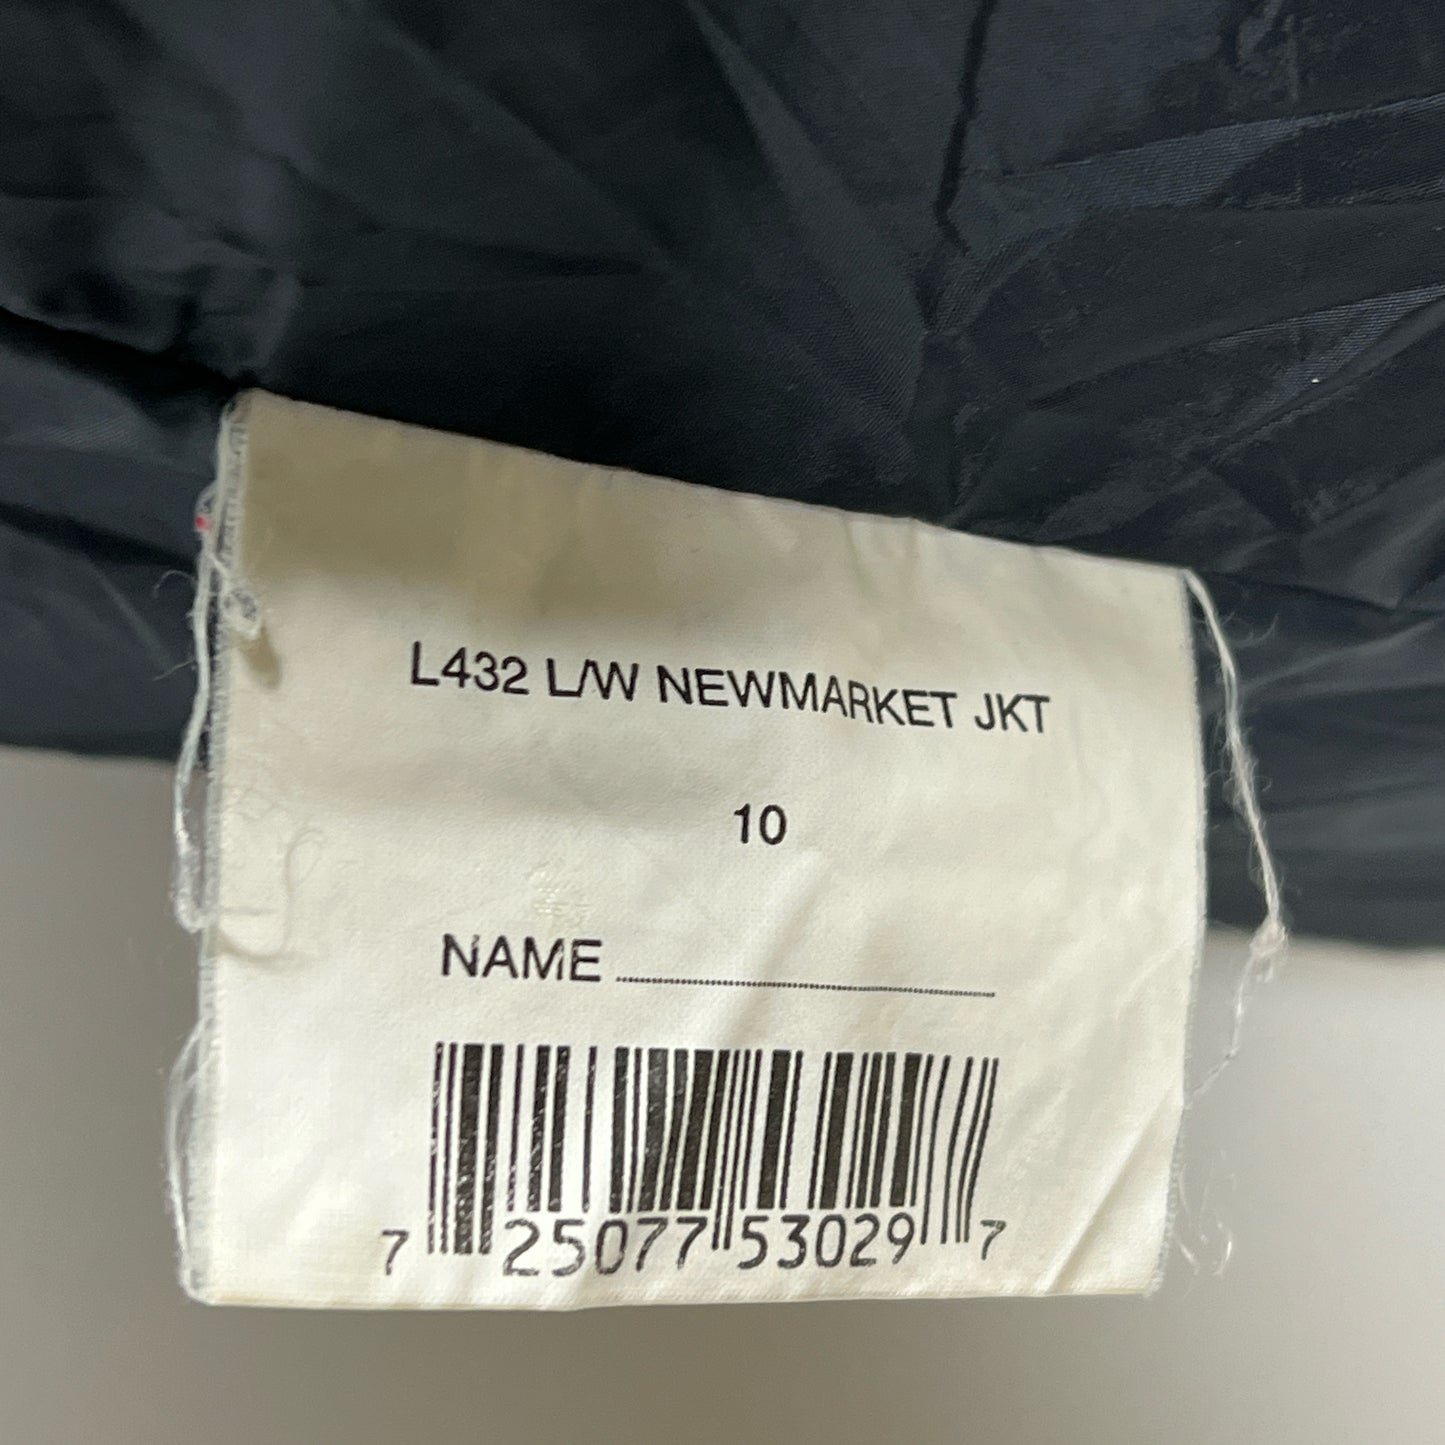 Giacca Barbour donna cotone nero Newmarket Recente UK10 Small- Black cotton Jacket